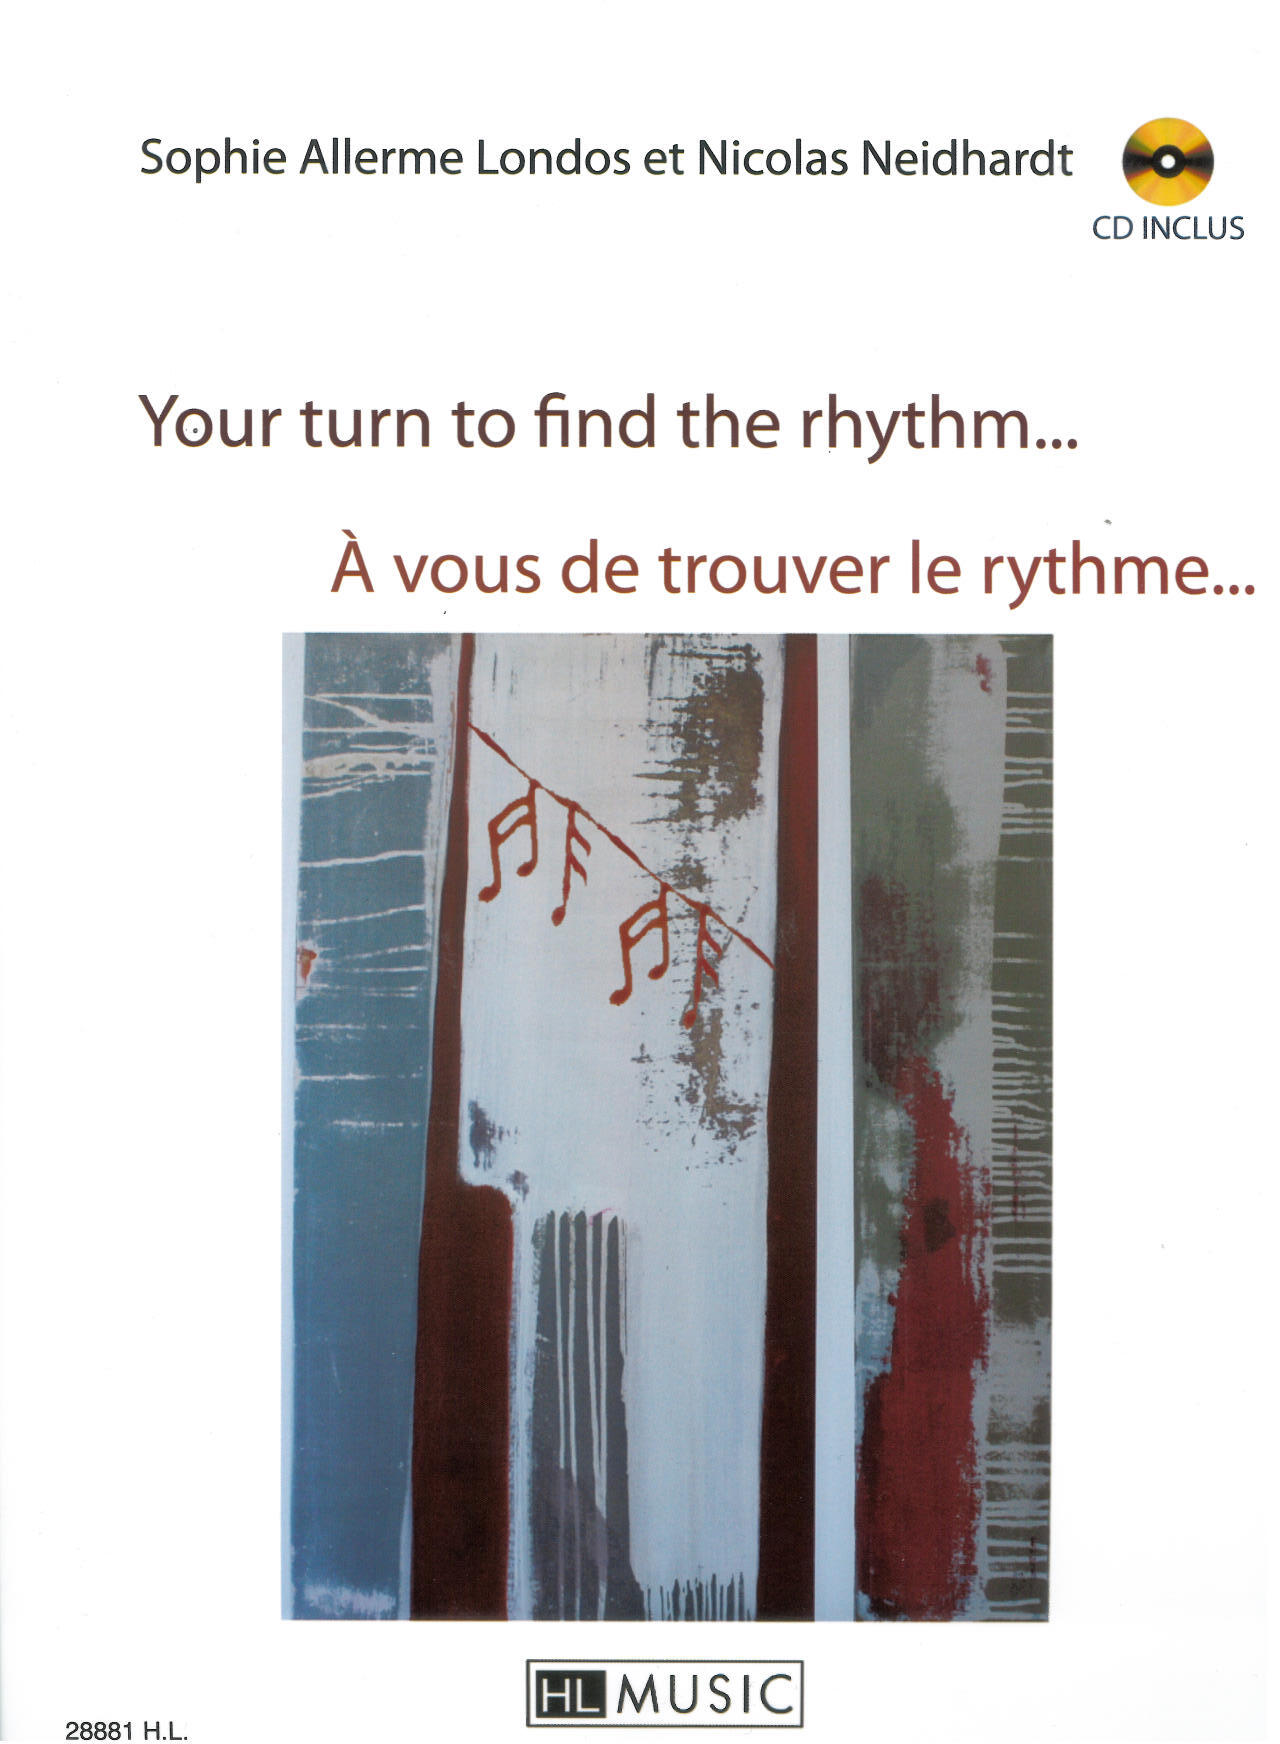 You turn to find the rhythm...A vous de trouver le rythme... : photo 1